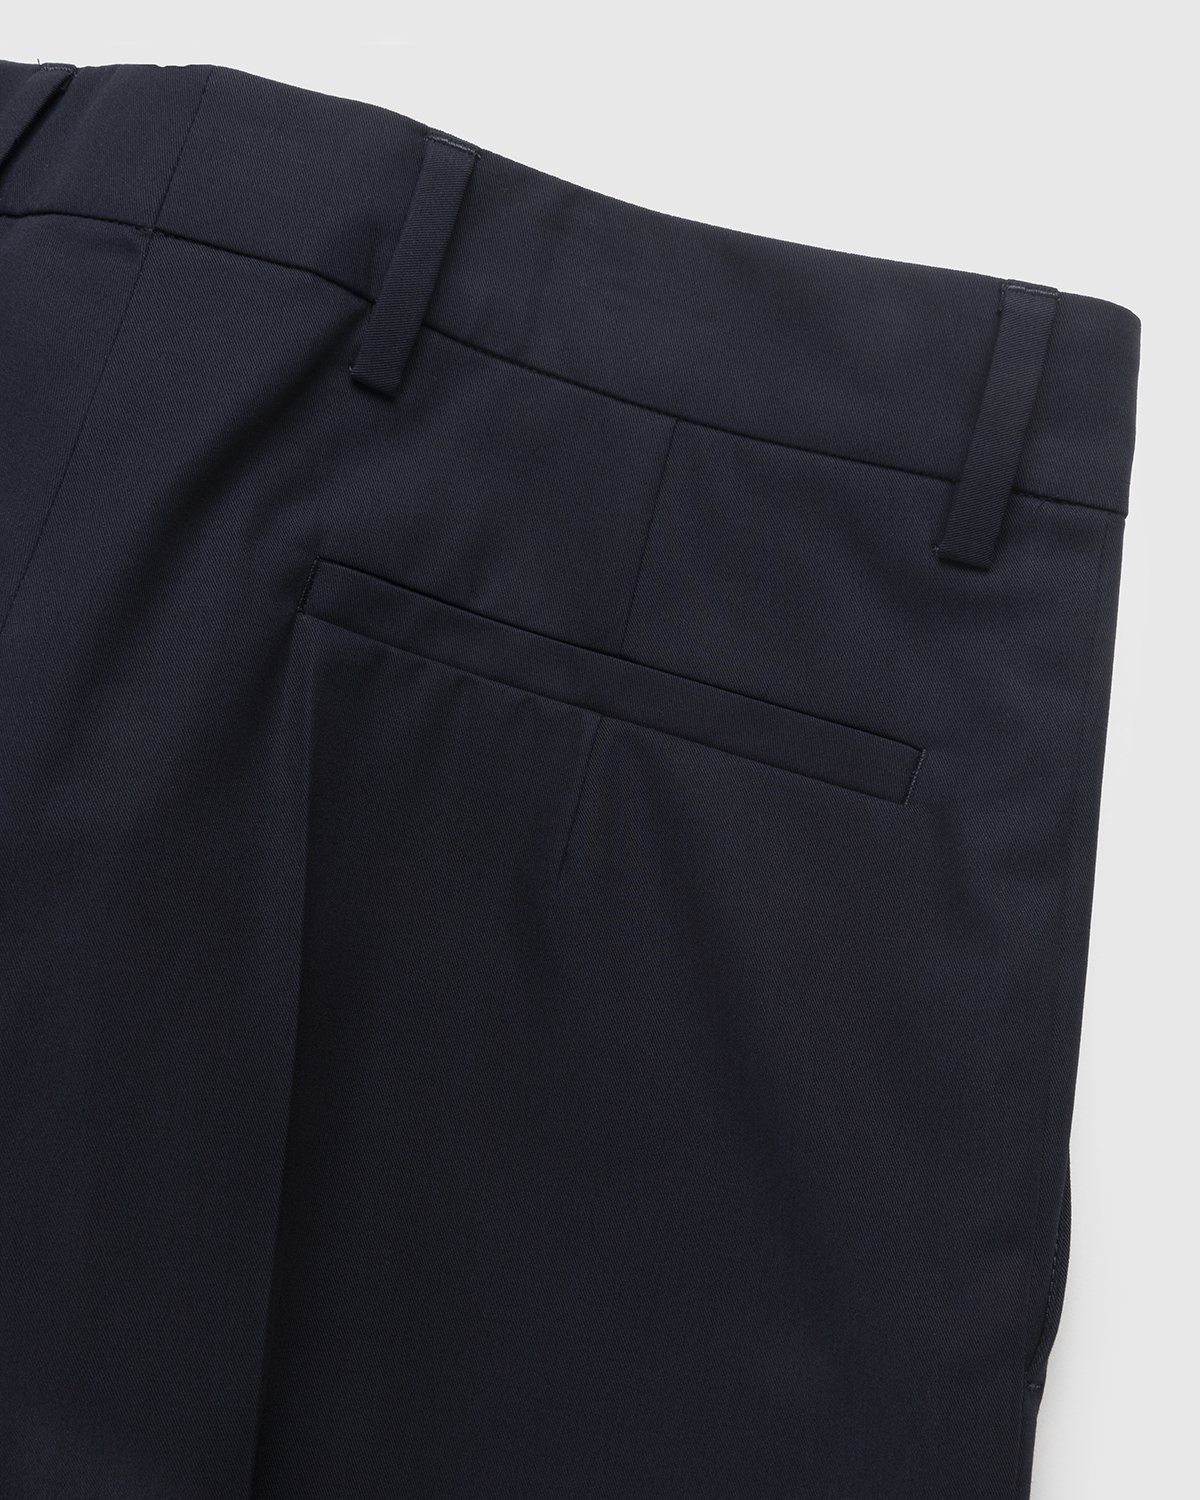 Dries van Noten - Parwin Shorts Navy - Clothing - Blue - Image 3